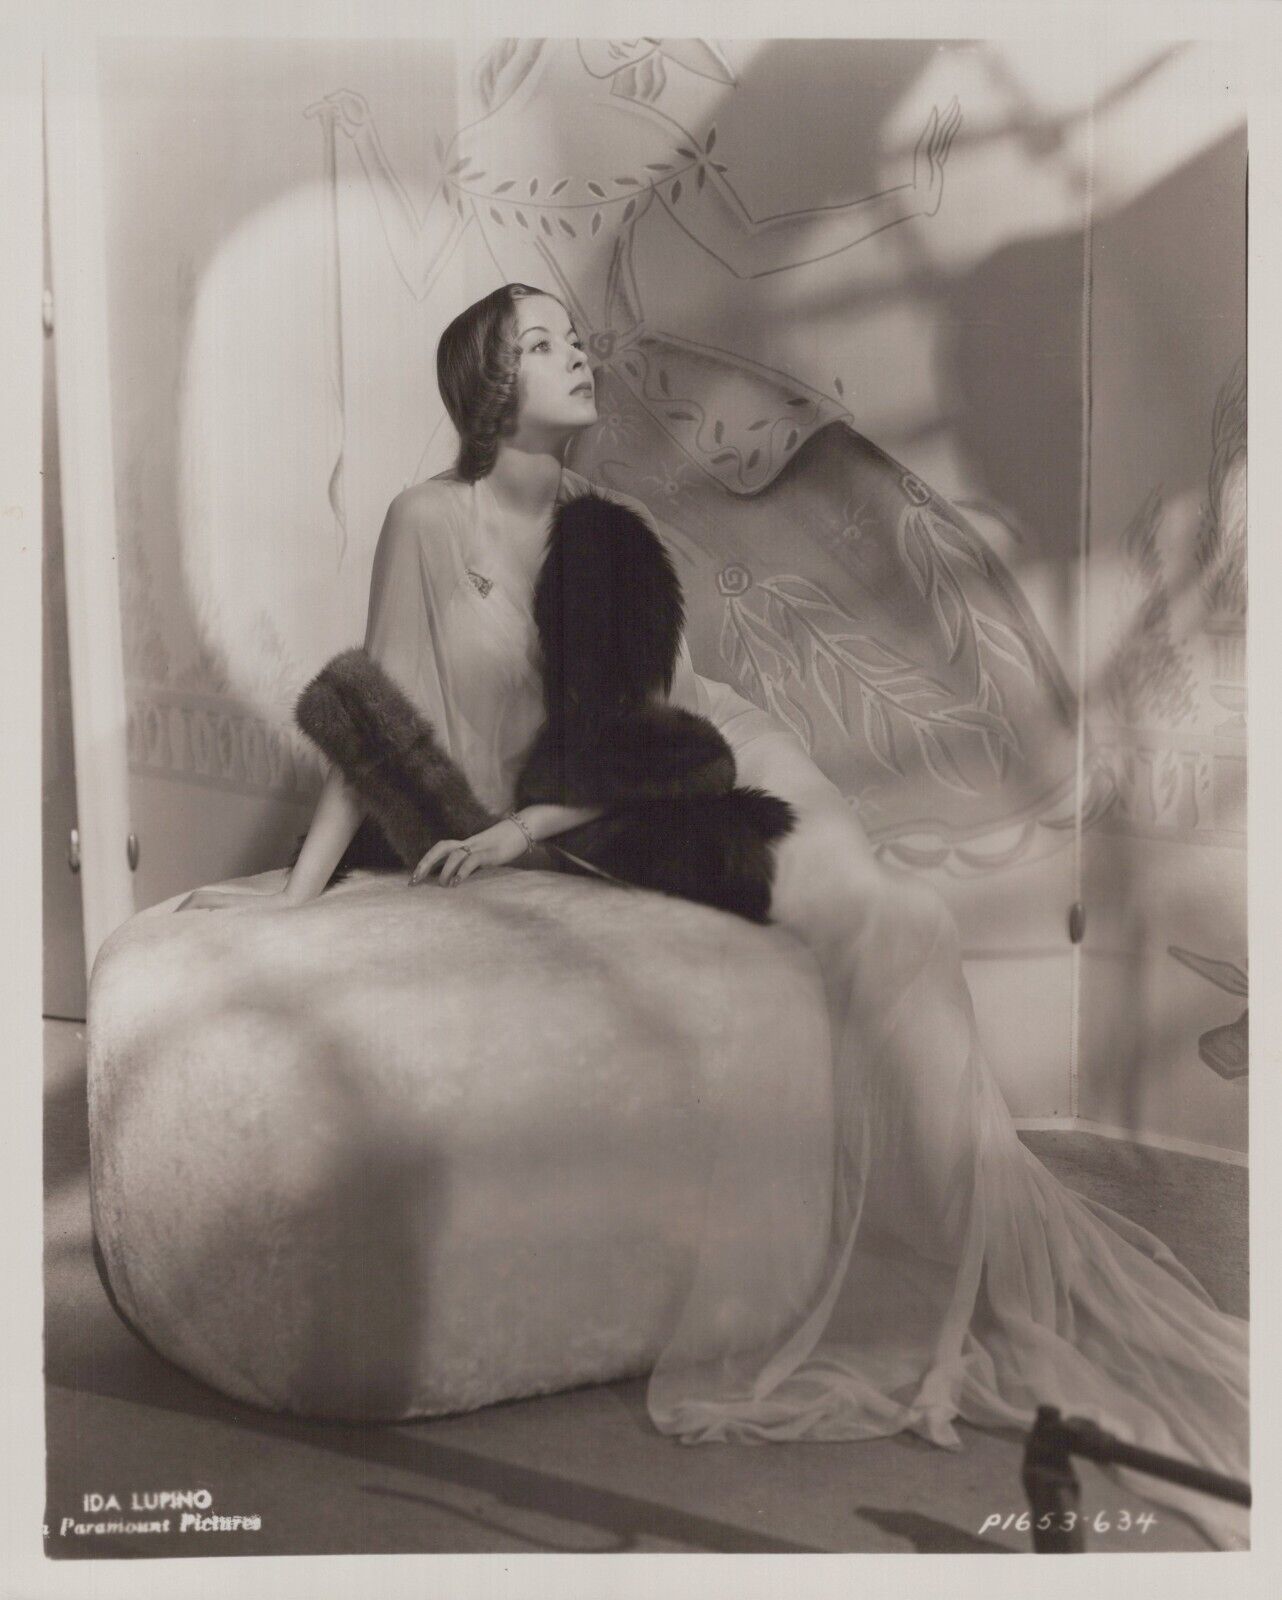 HOLLYWOOD BEAUTY IDA LUPINO ALLURING POSE STUNNING PORTRAIT 1950s Photo 593